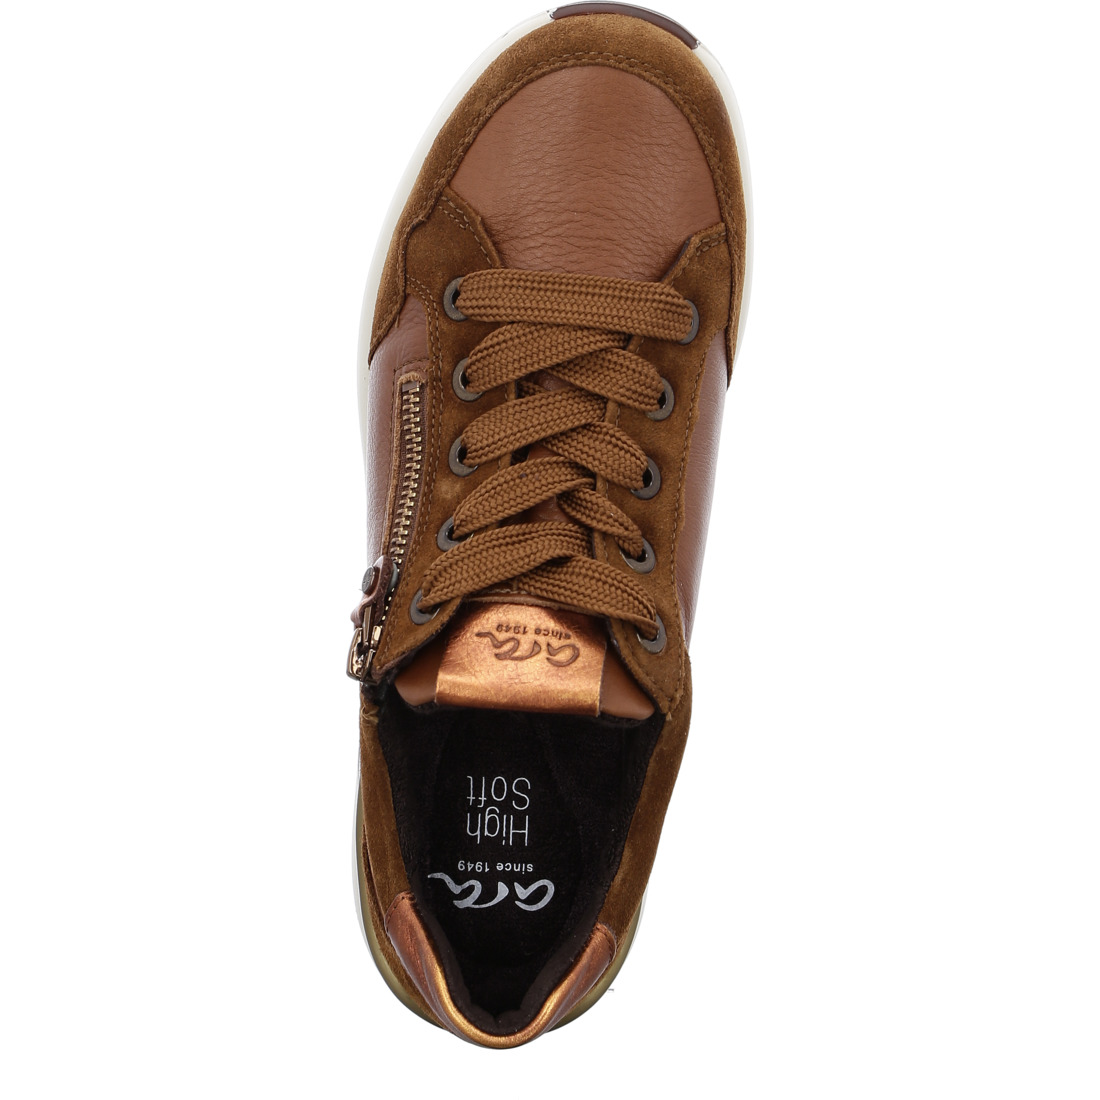 Sneaker Nara - Cognac smooth leather